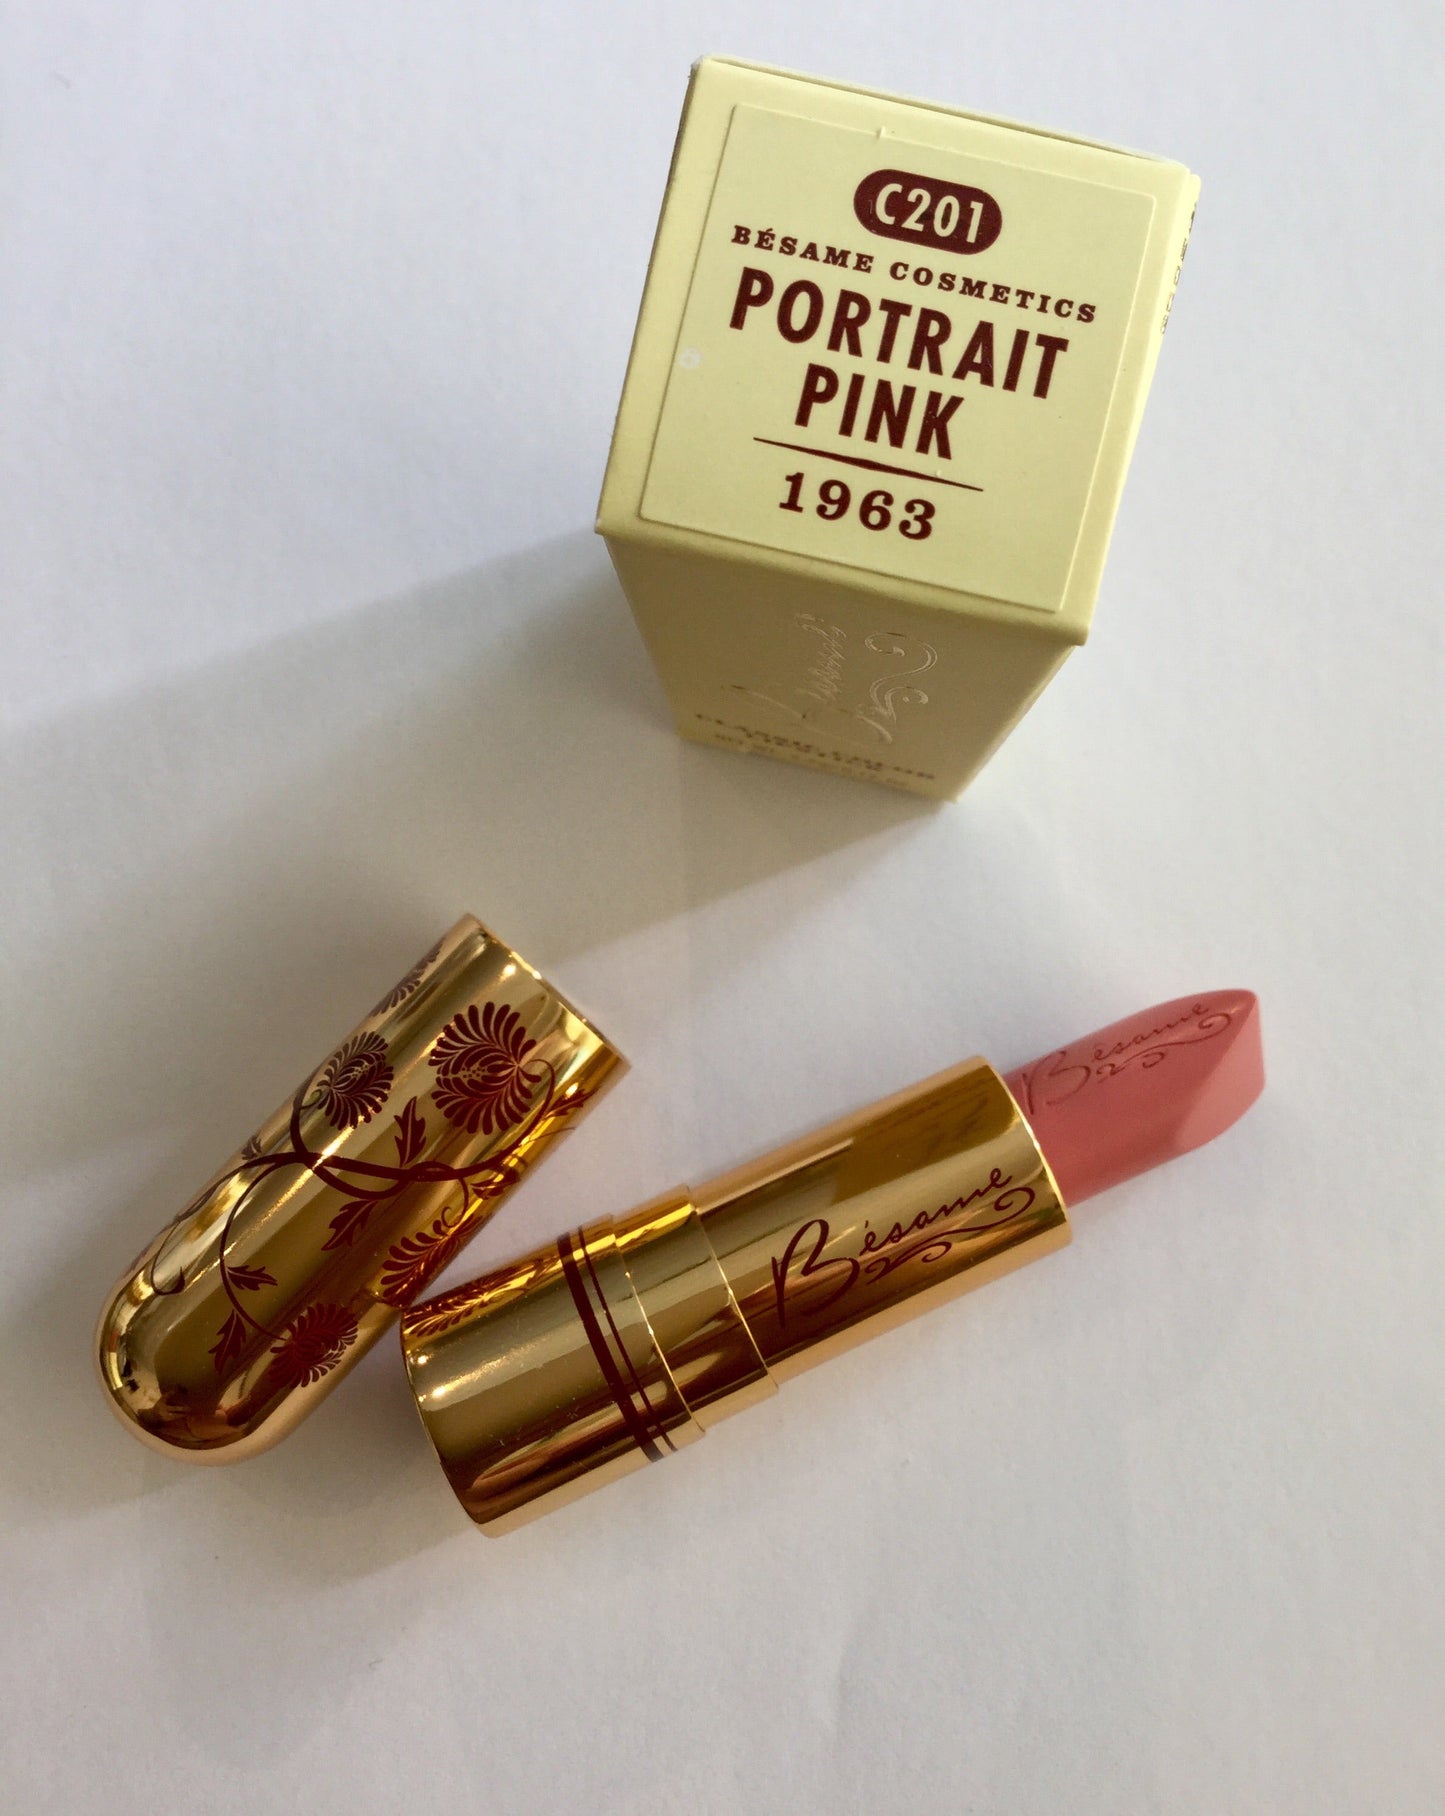 1963 Portrait Pink Lipstick